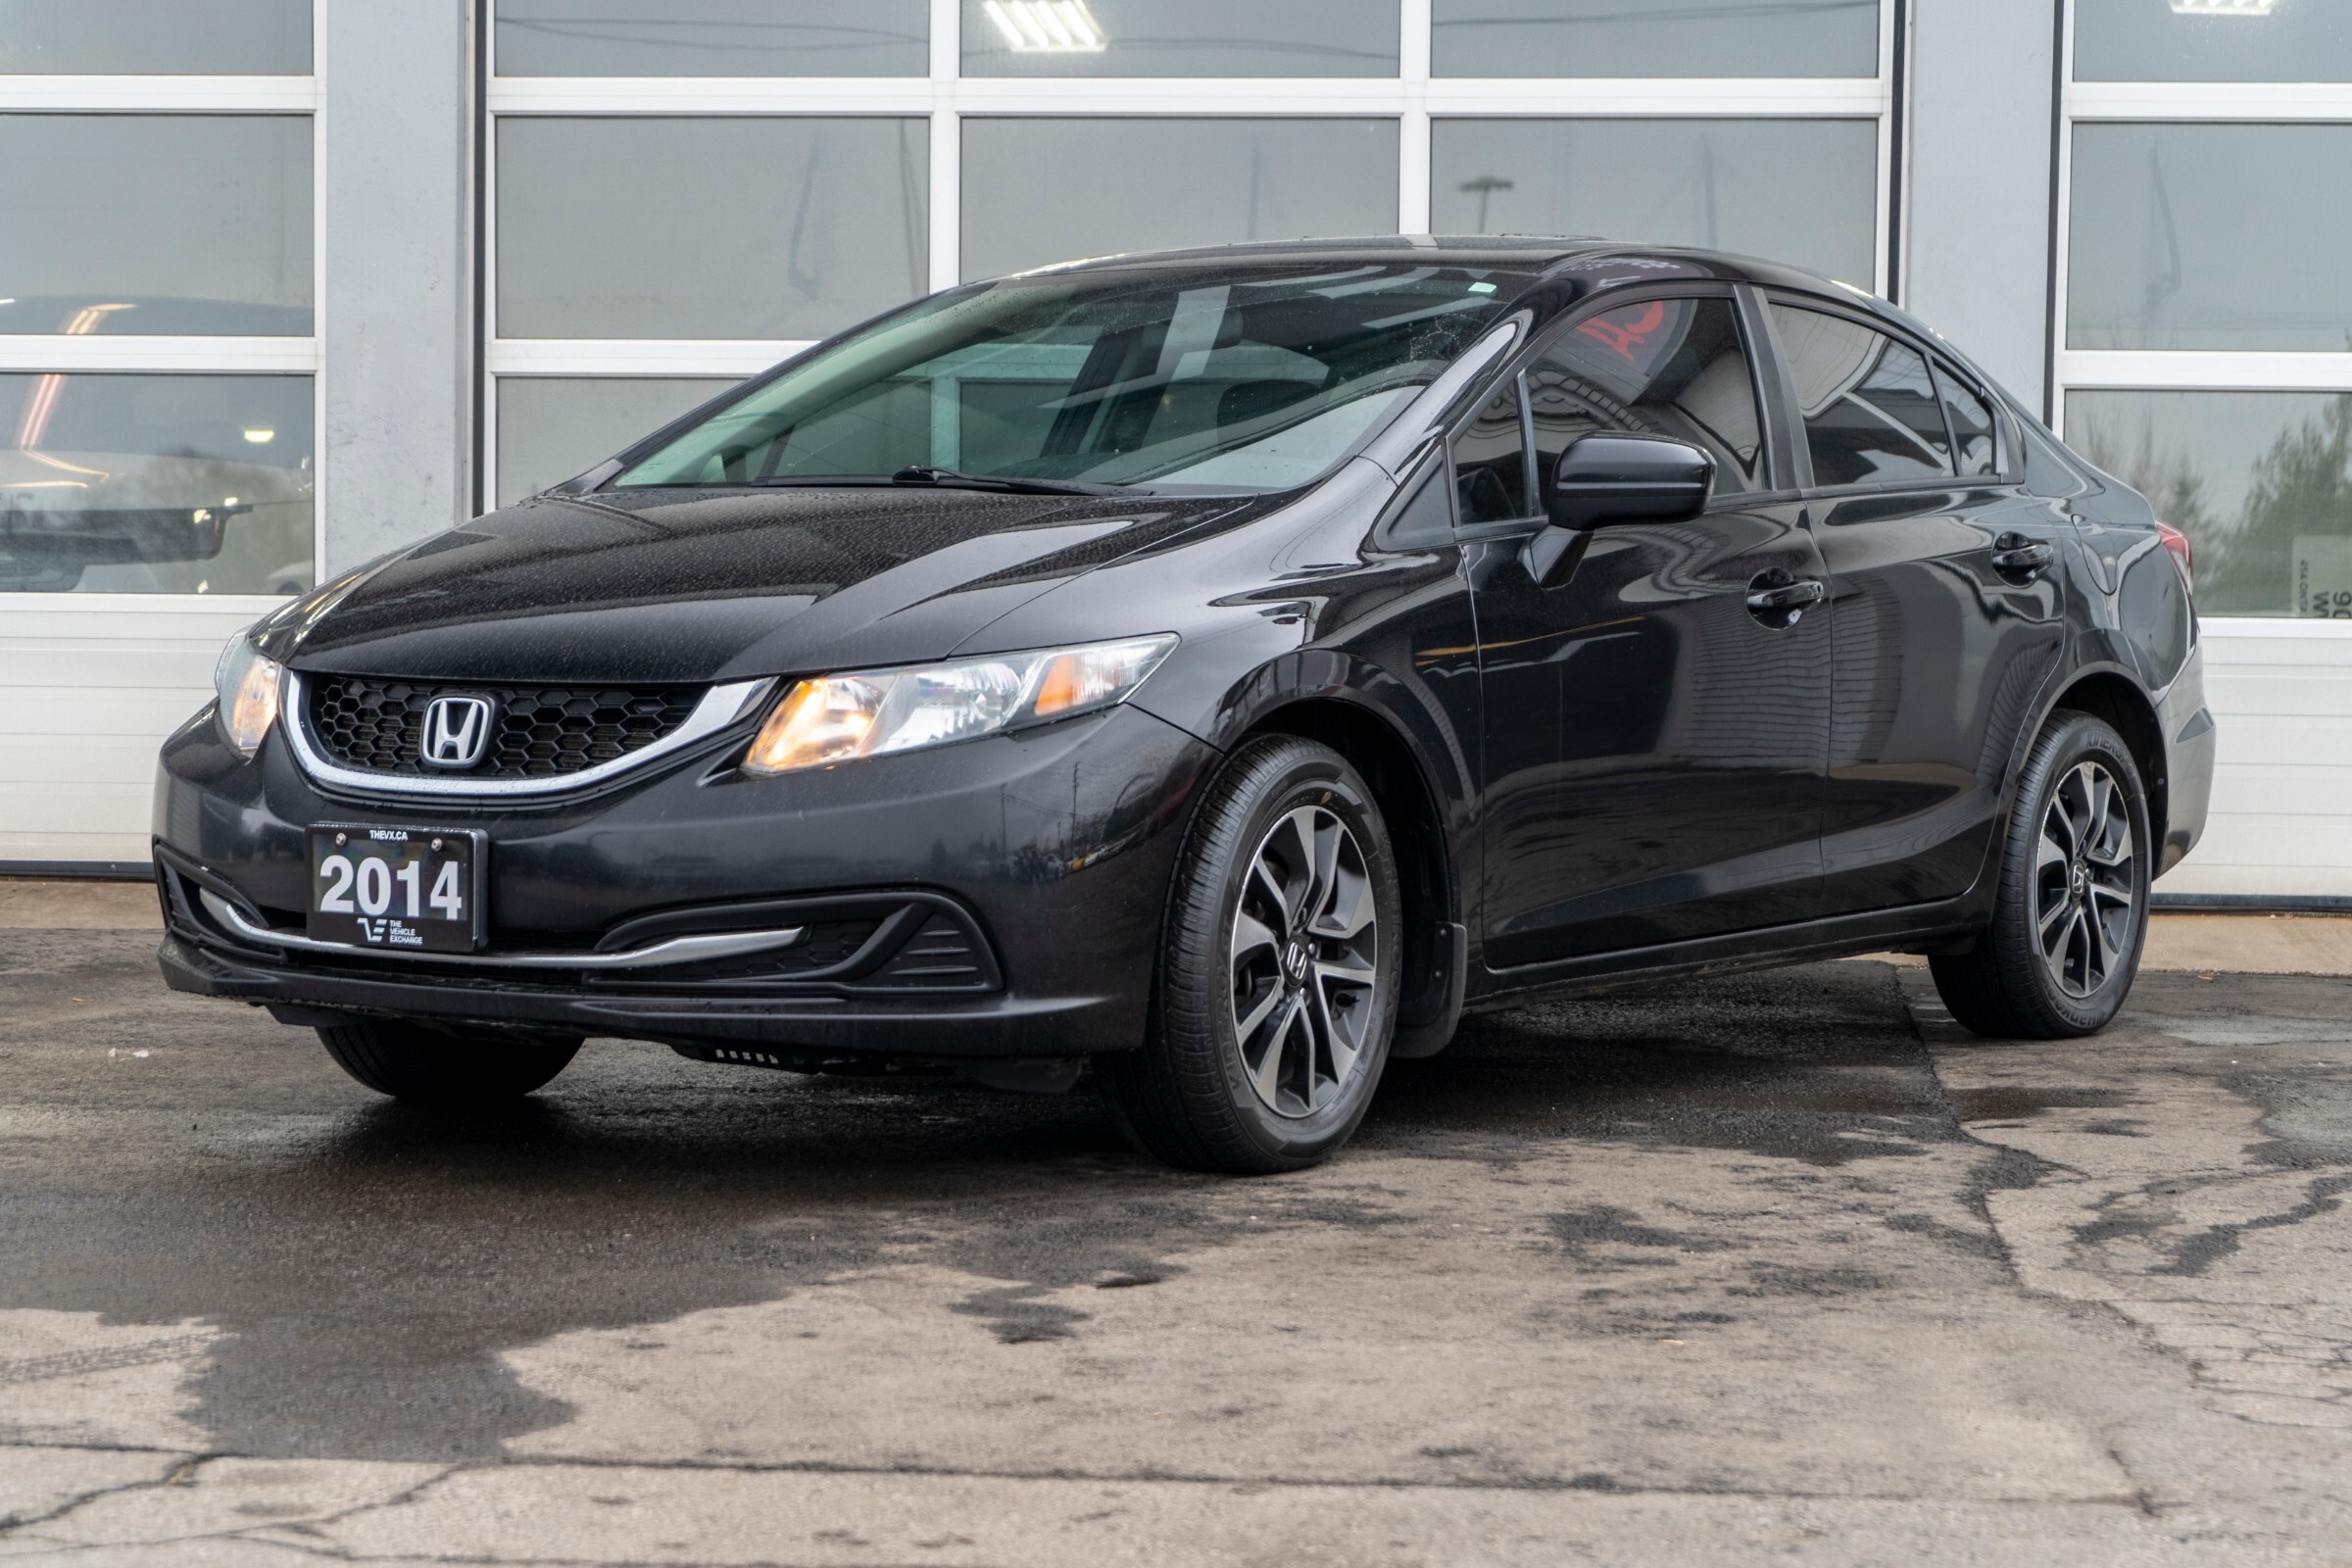 2014 Honda Civic EX| CVT| Sunroof| Alloy Rims| Bluetooth| HTD Seats